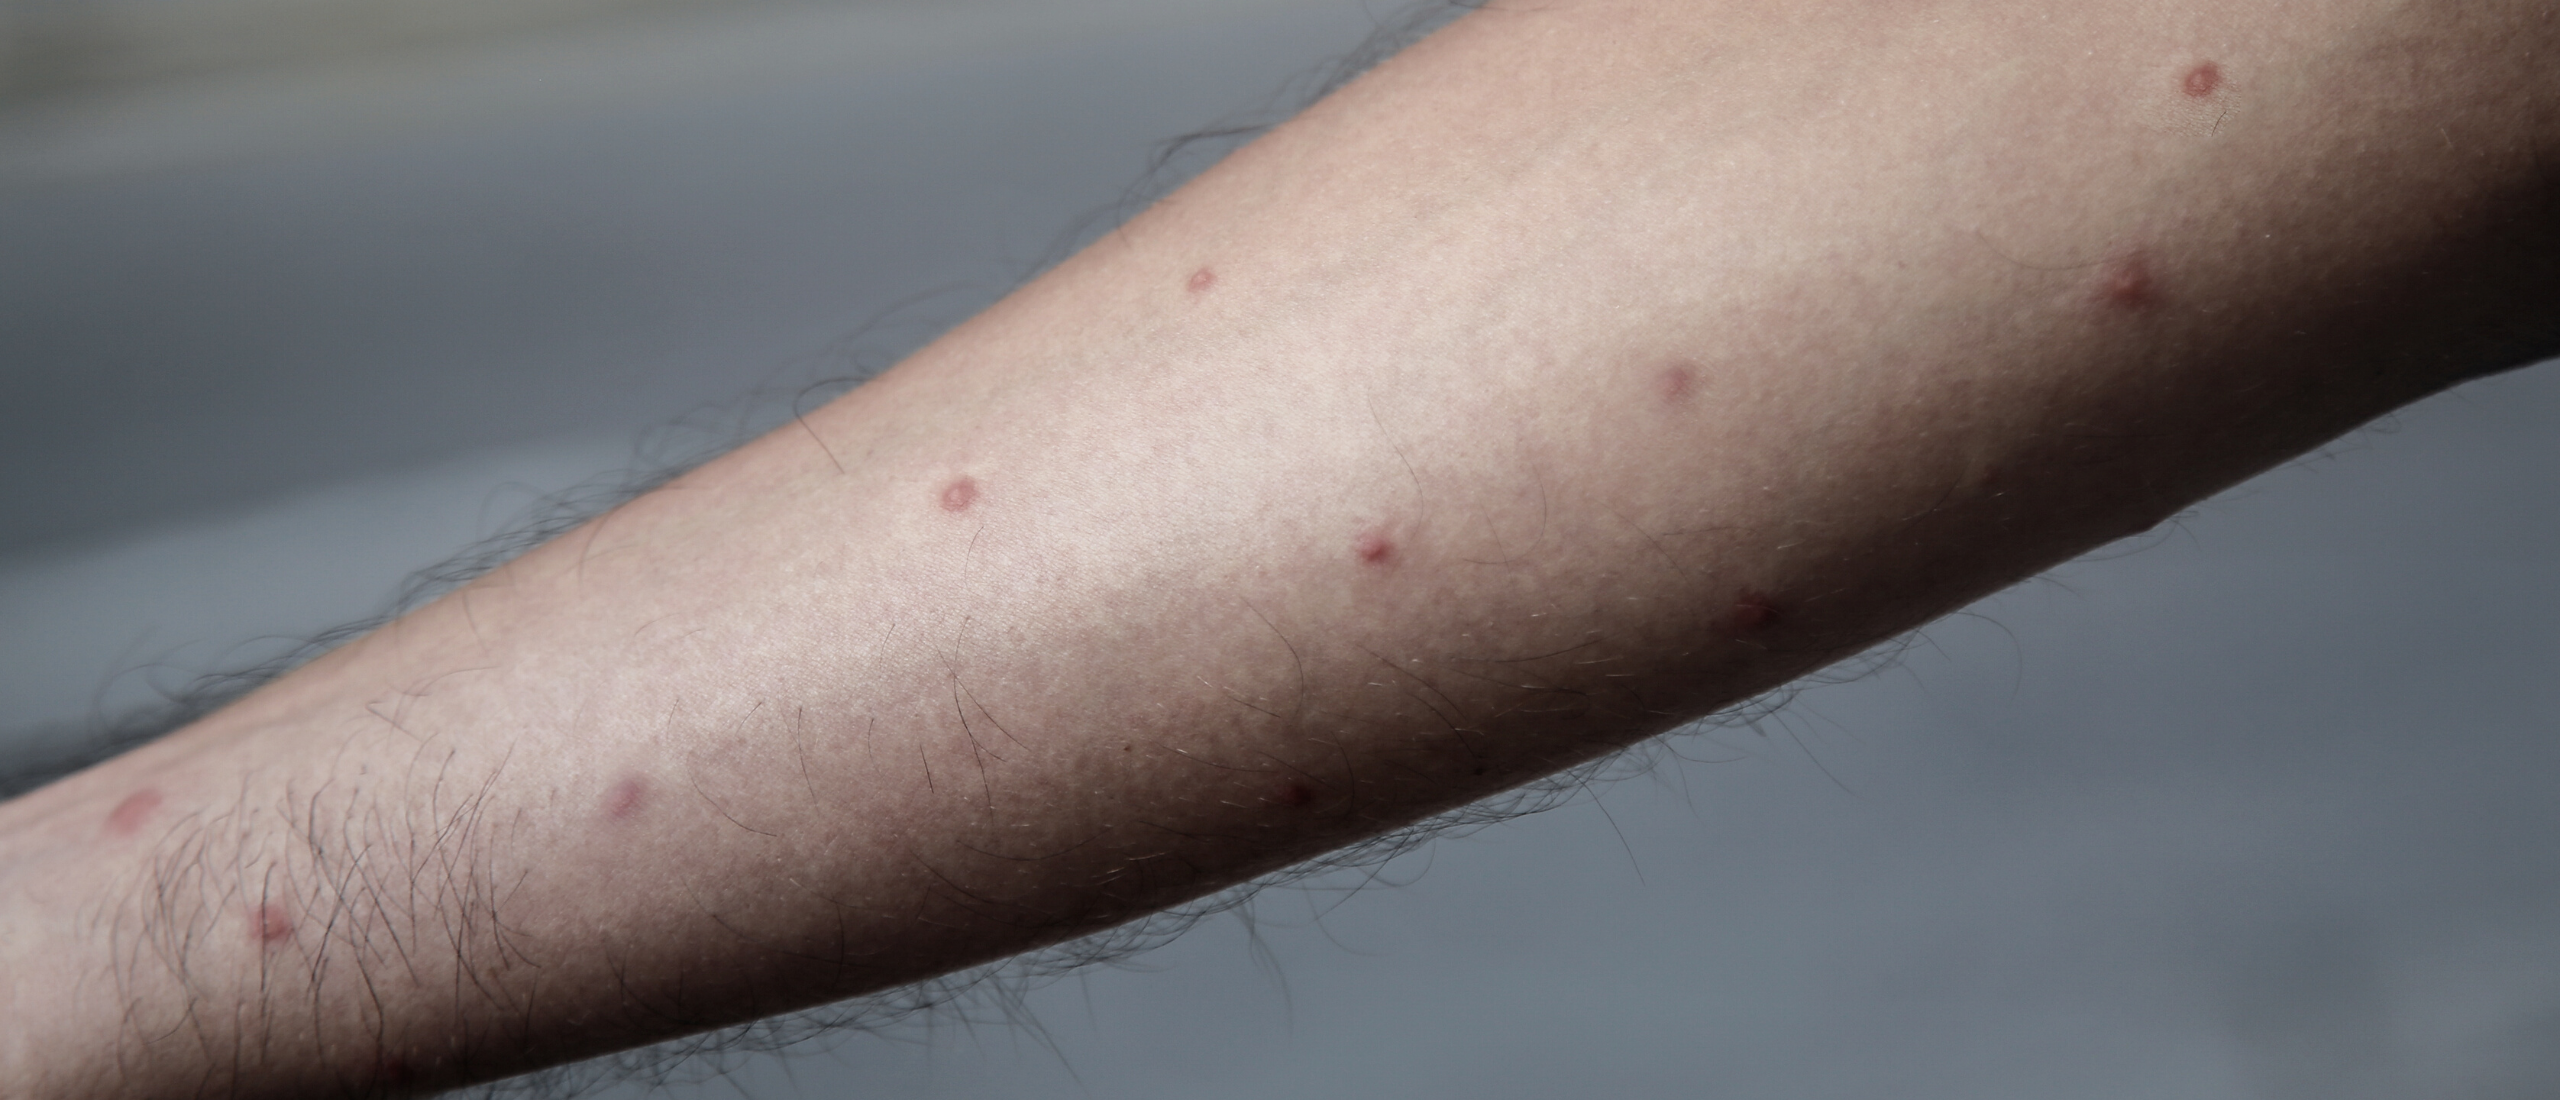 Muggenbulten: zwelling na muggenbeet